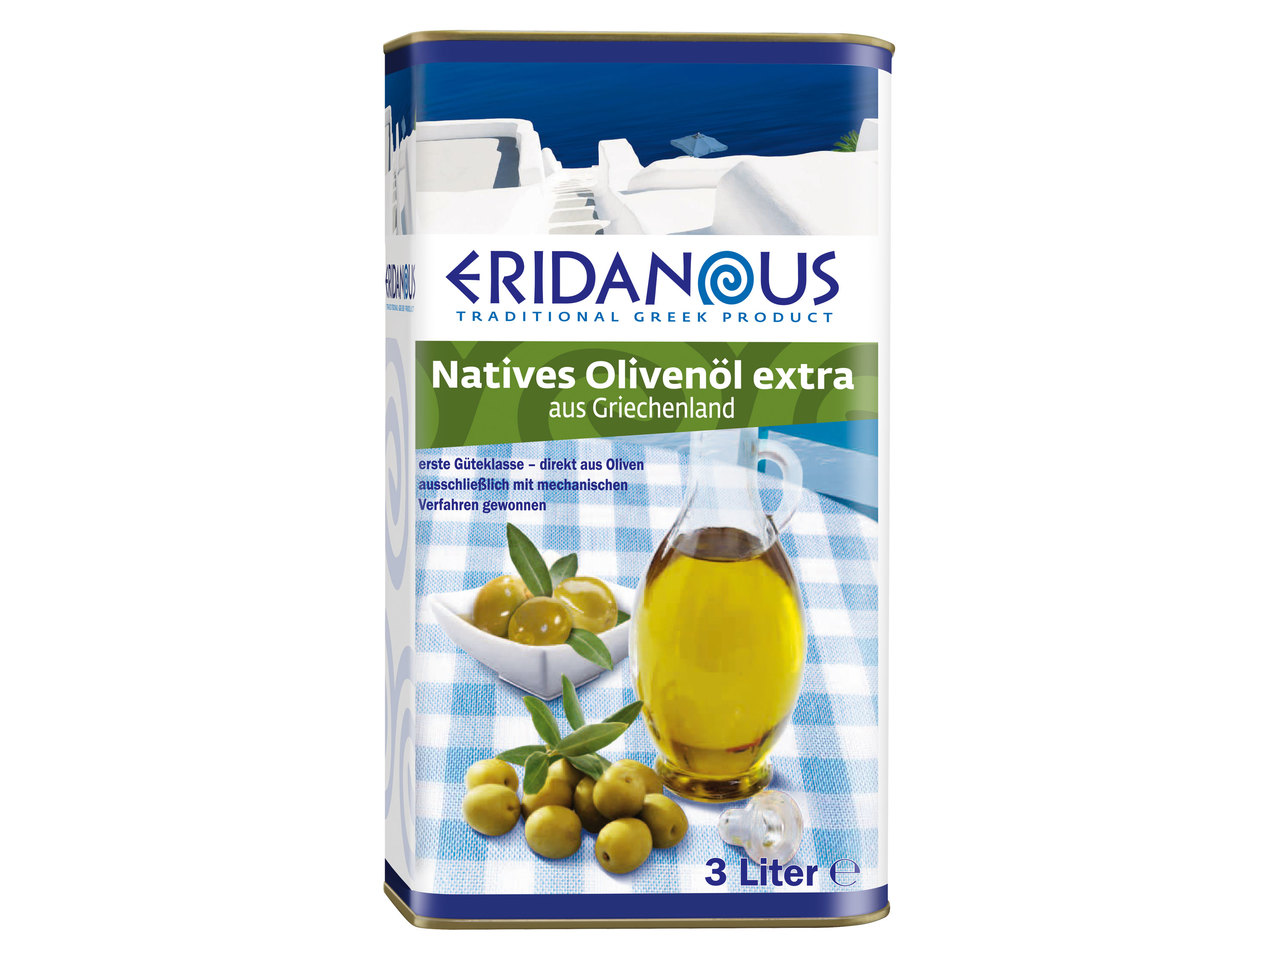 ERIDANOUS Natives Olivenöl extra 3 Liter